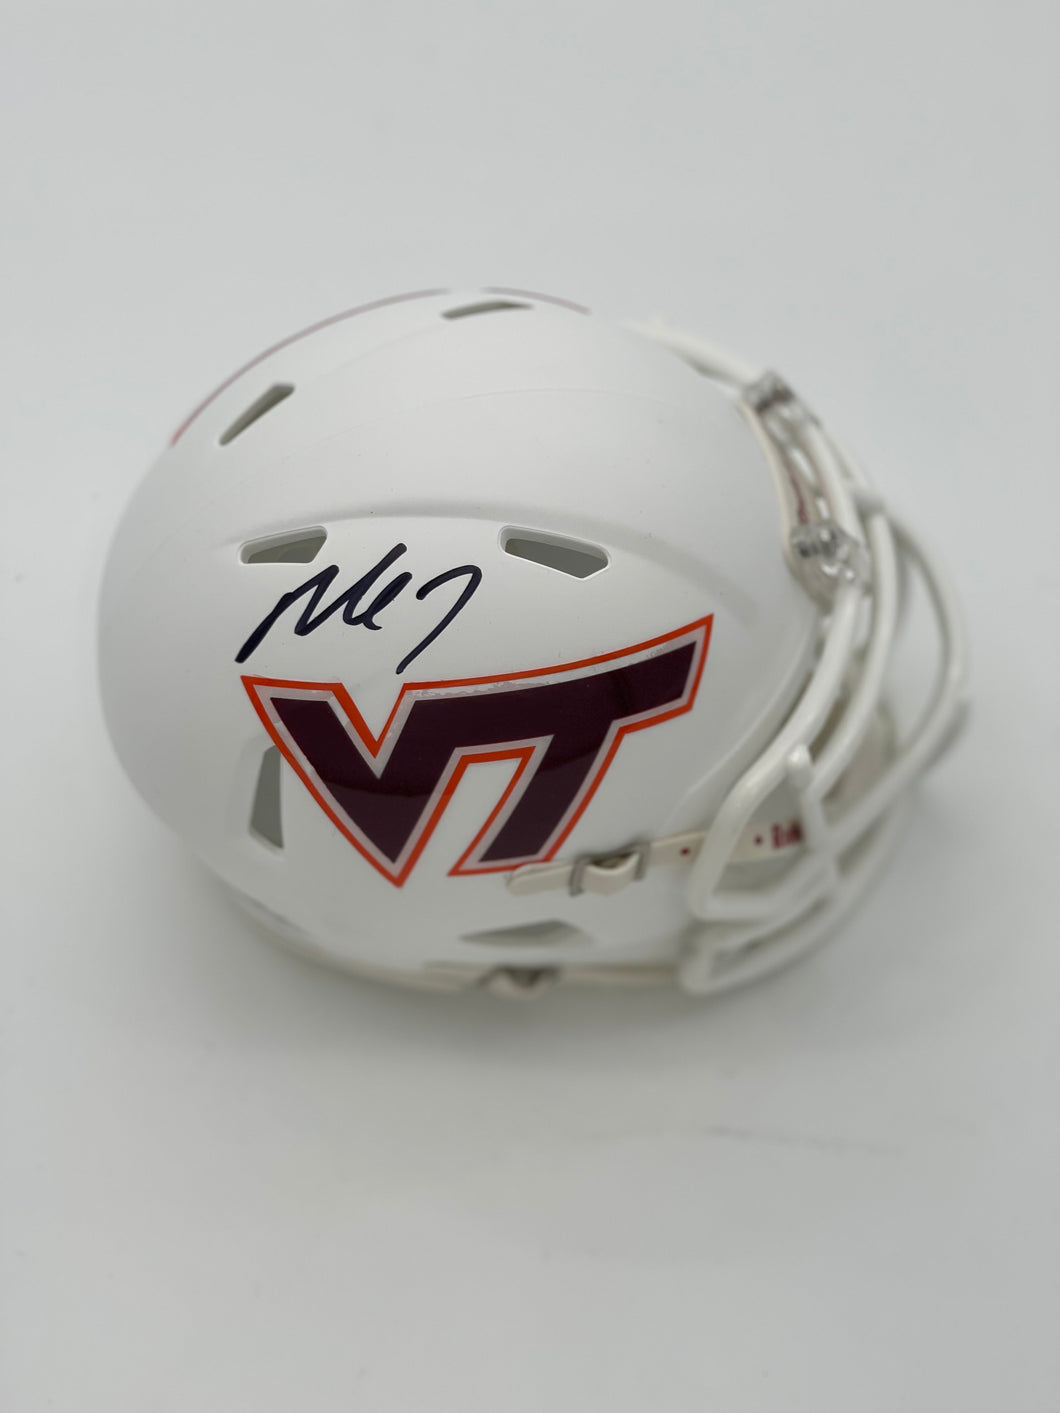 Michael Vick signed VT mini helmet